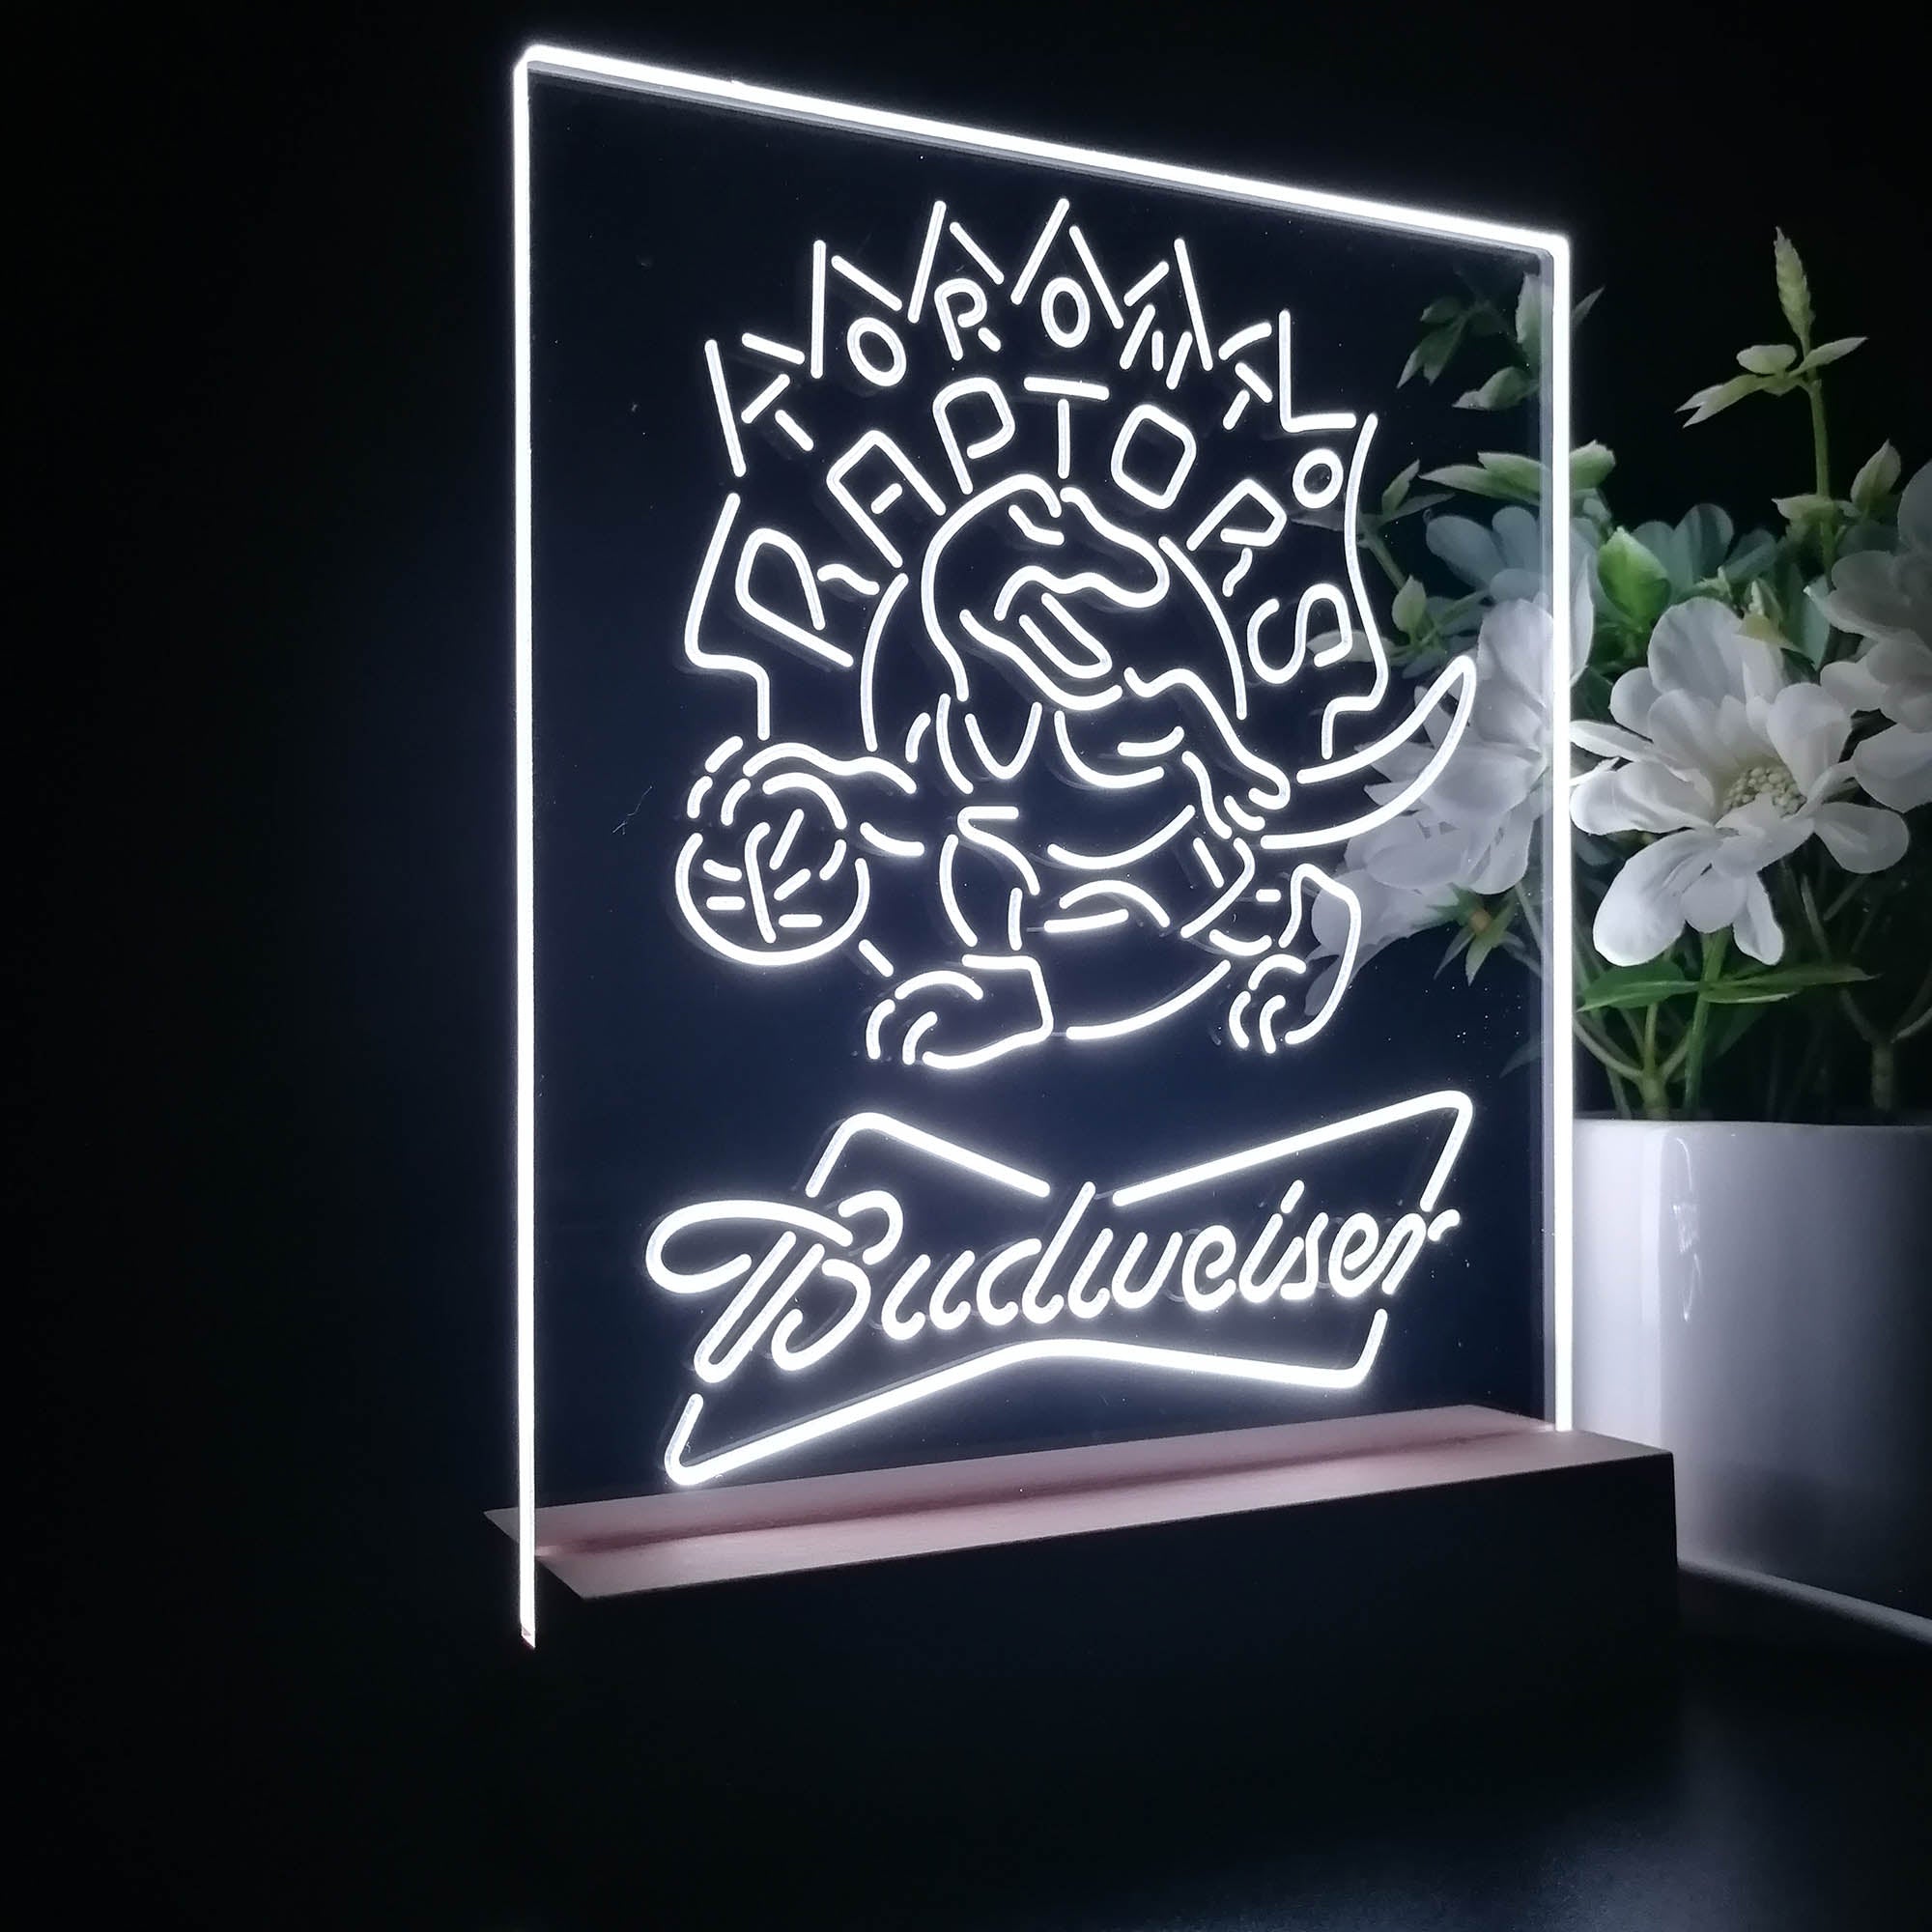 Toronto Raptors Budweiser Neon Sign Pub Bar Lamp